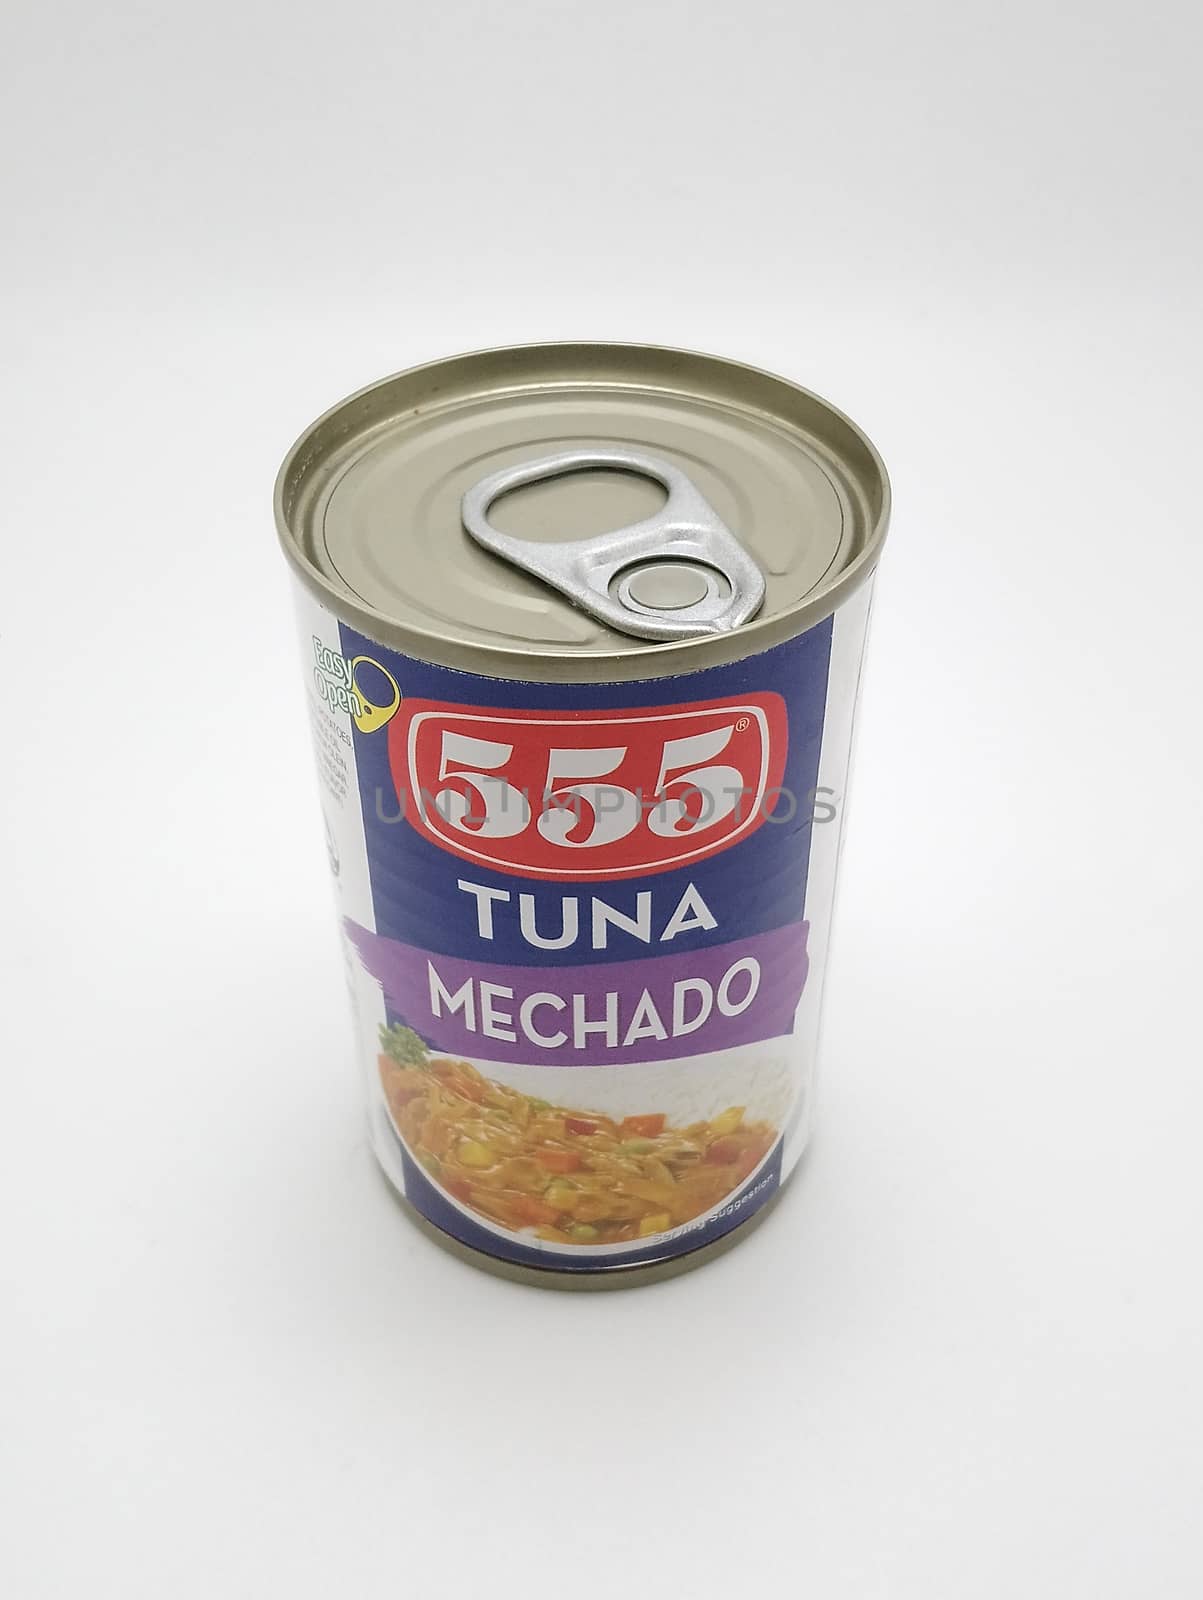 555 tuna mechado can in Manila, Philippines by imwaltersy